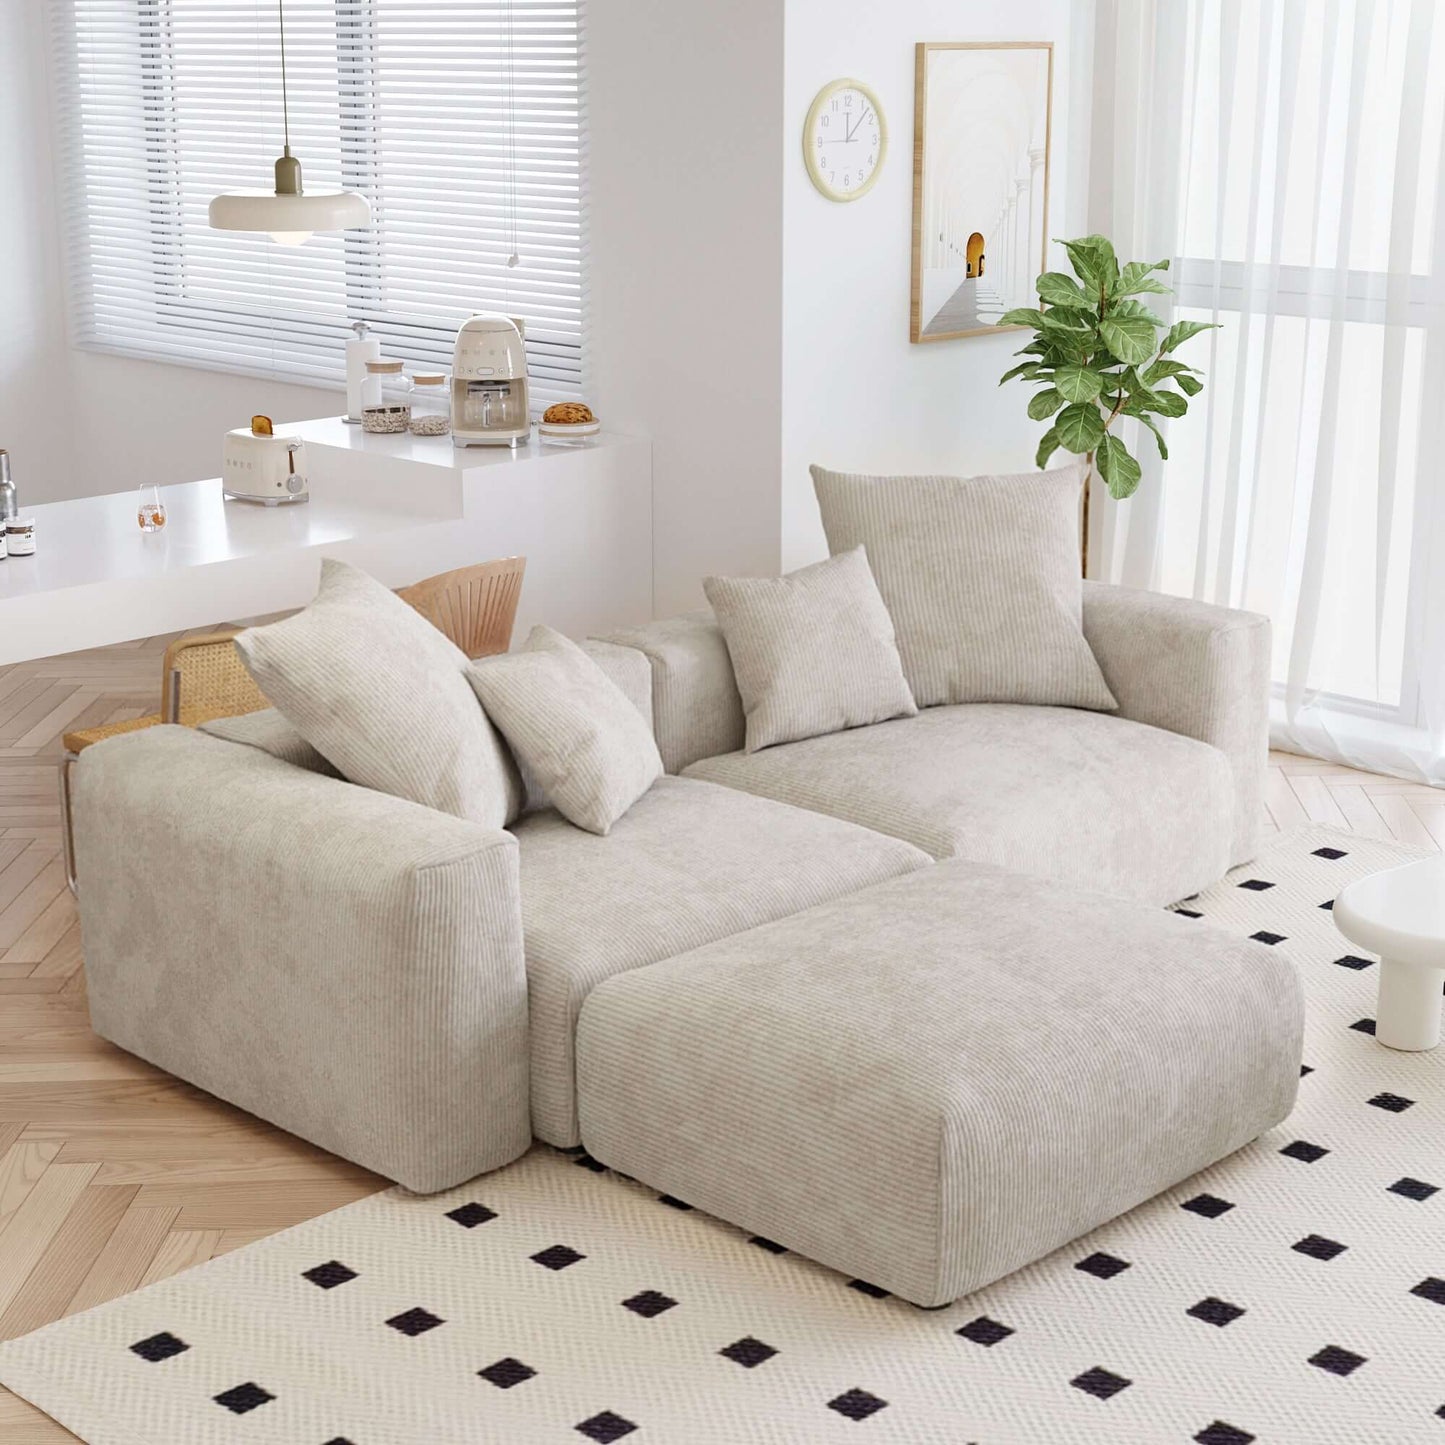 Big-Plush Modular Corduroy Sectional Sofa Customizable (Brown, Black, or Beige)